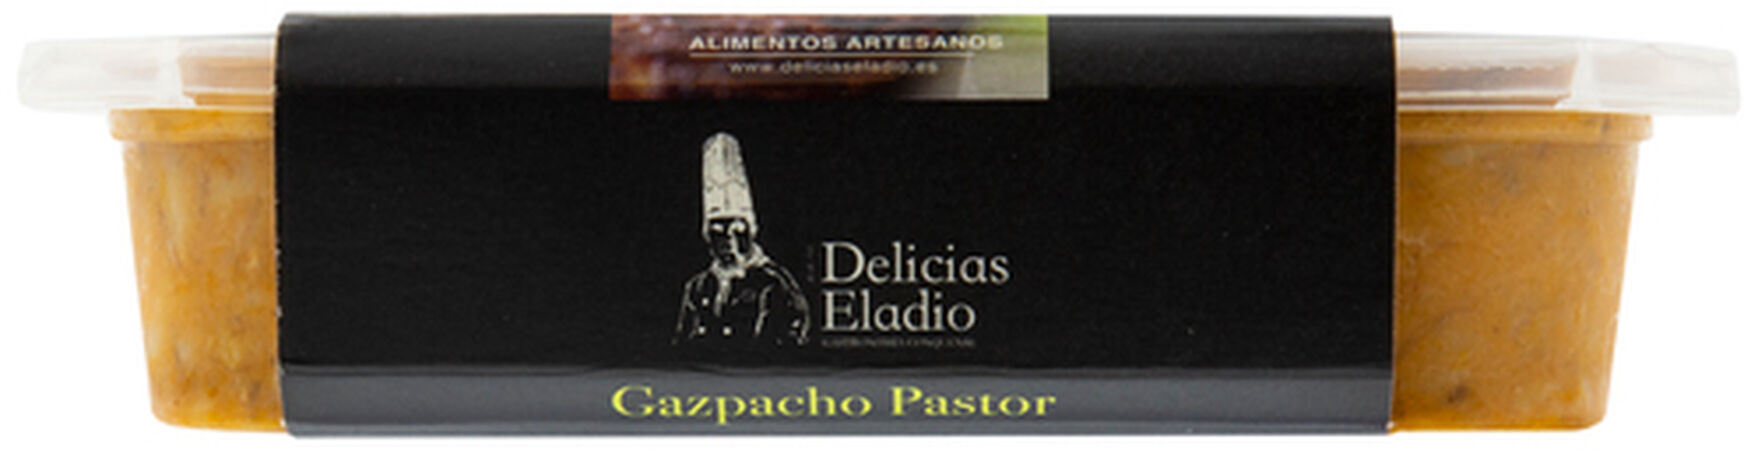 Gazpacho pastor Eladio 500g